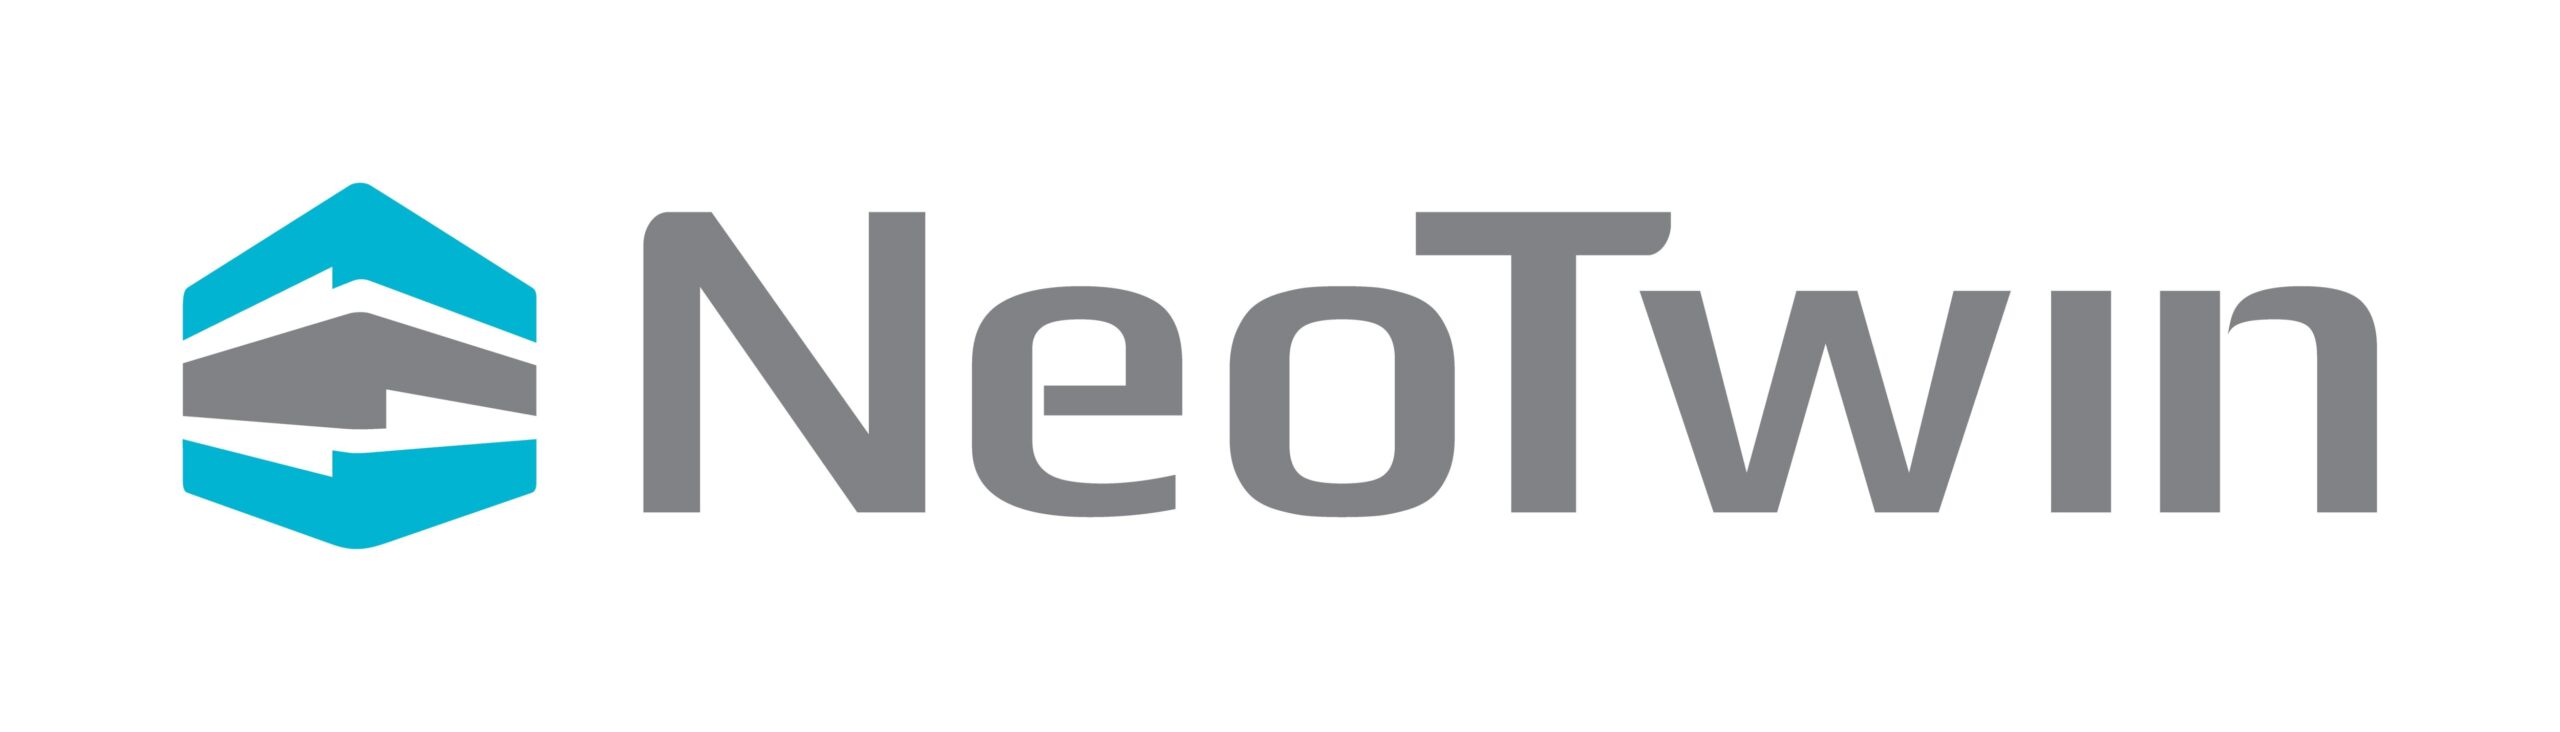 NeoTwin - Logos